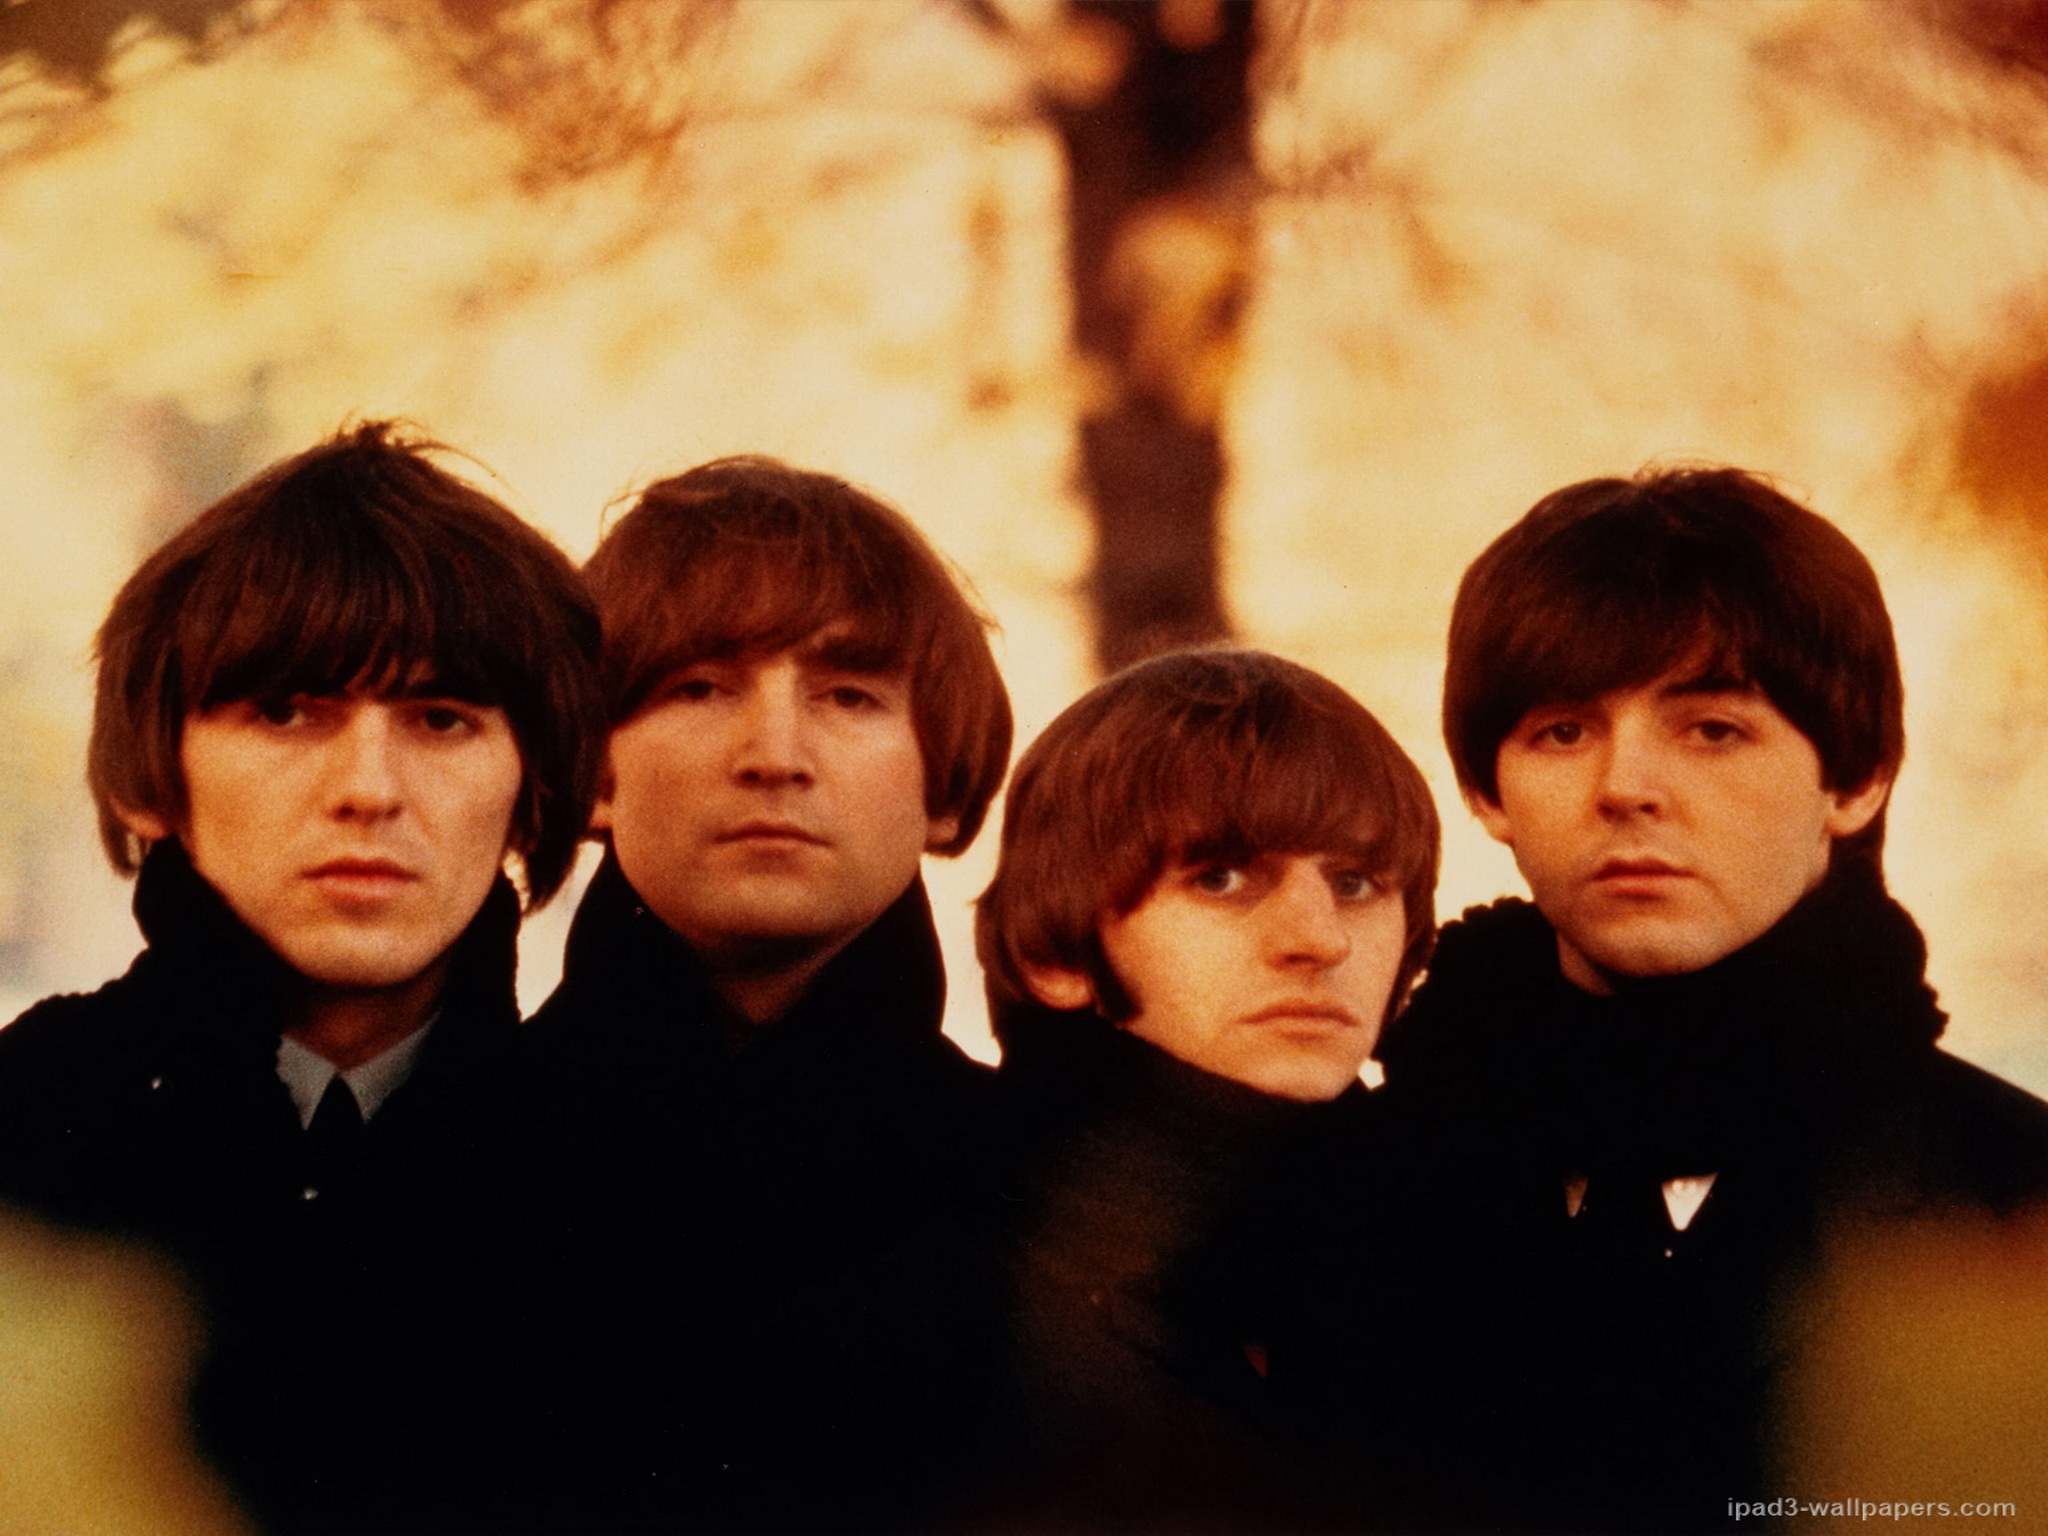 iPad Wallpaper Image Background The Beatles